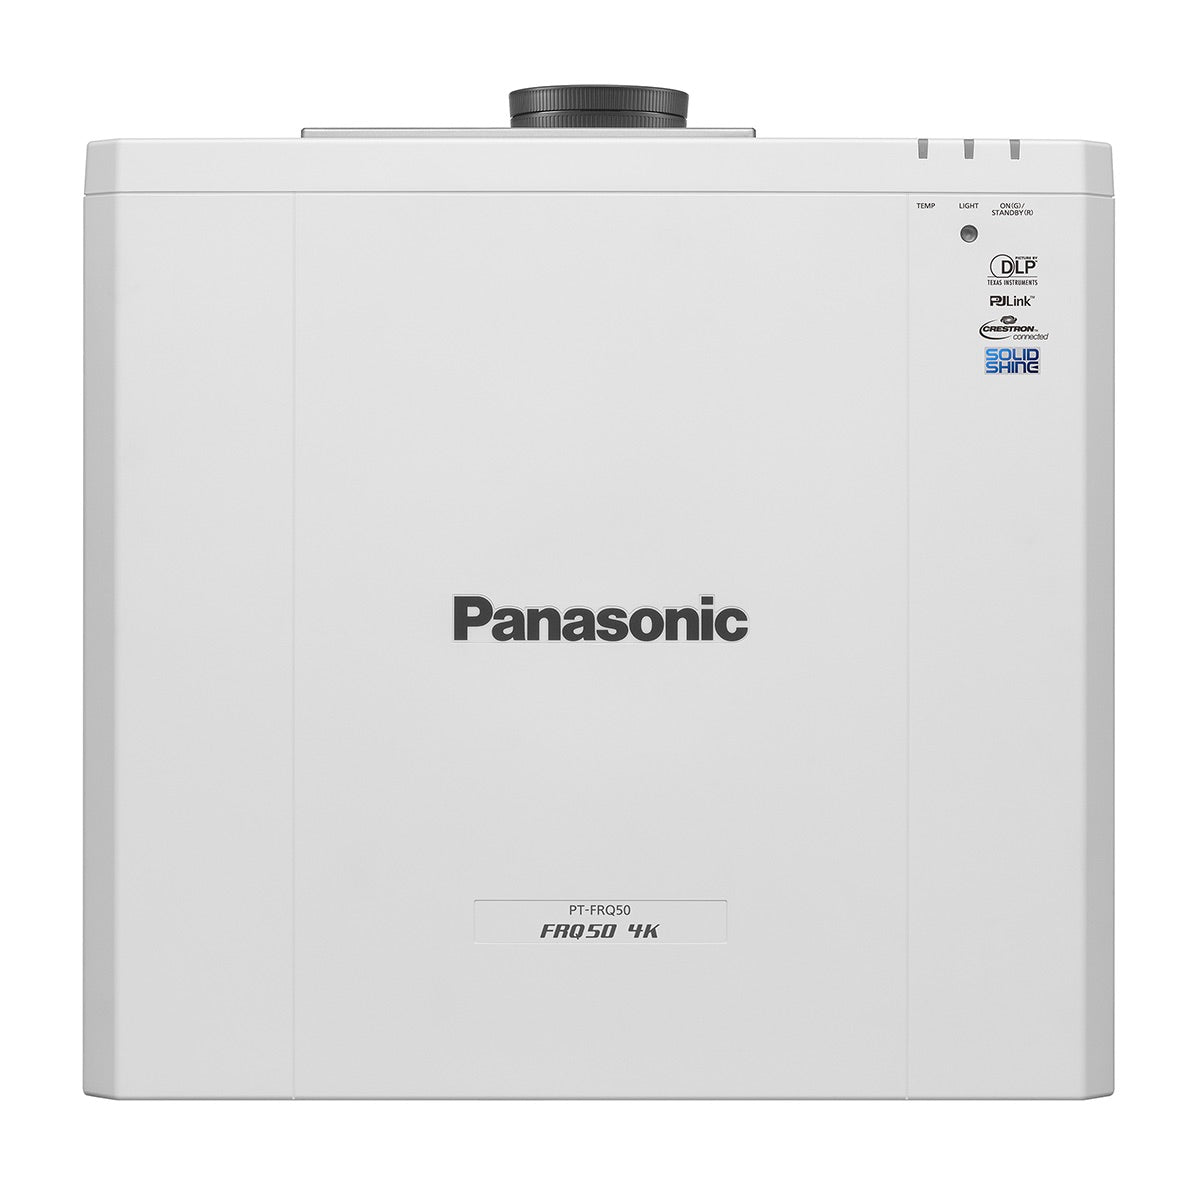 Panasonic PT-FRQ50 top